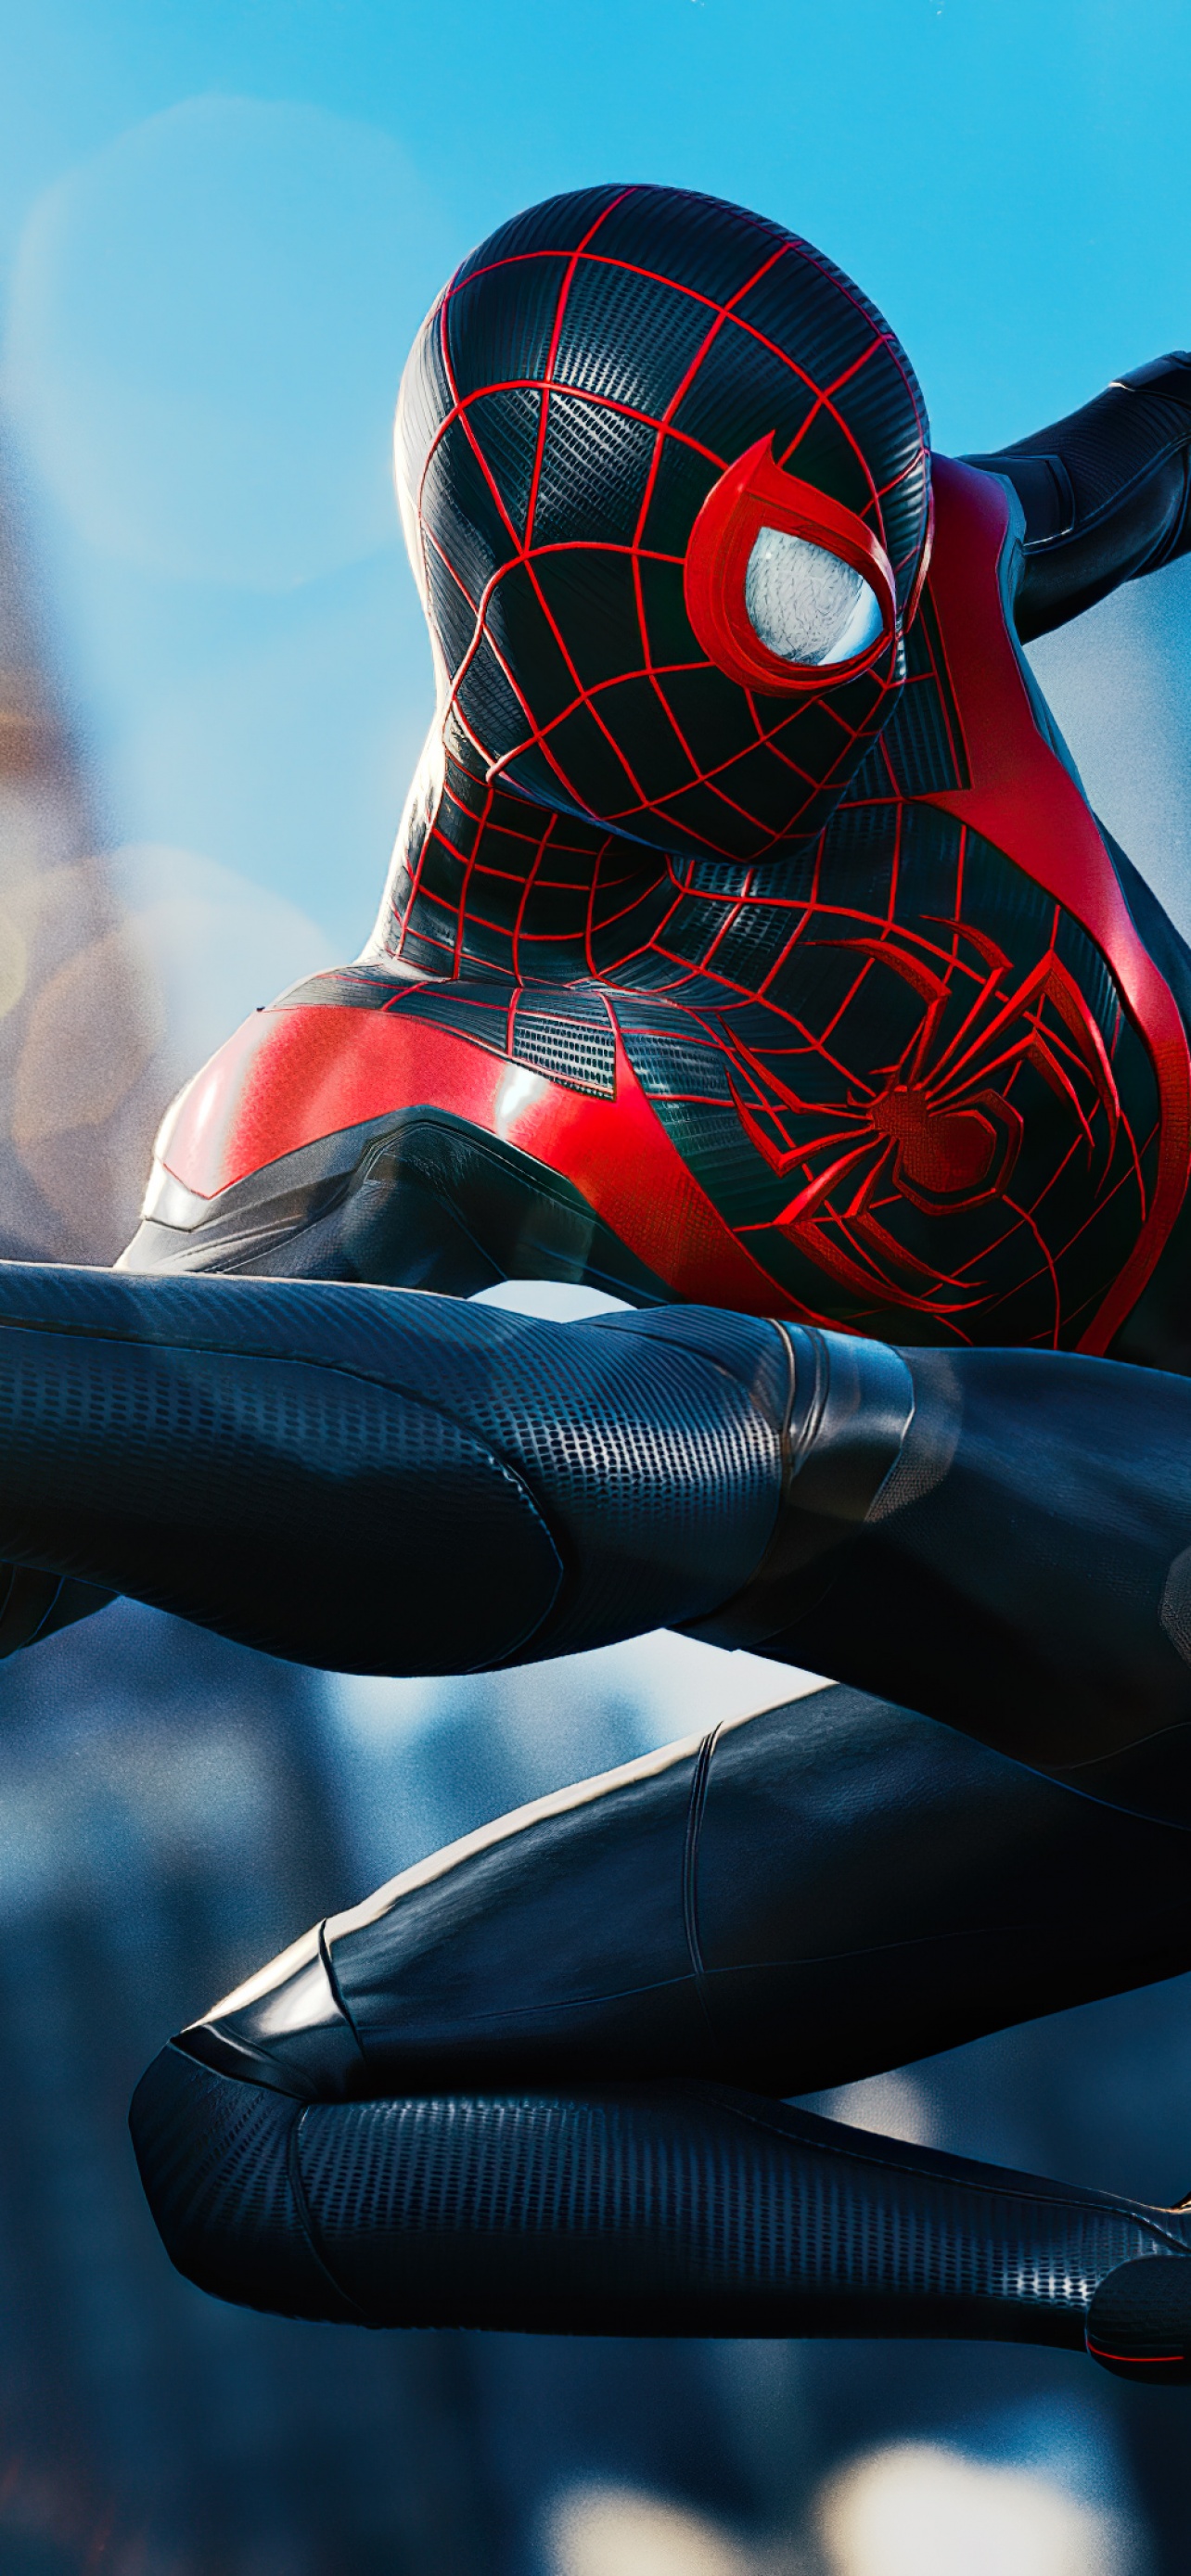 Marvel's Spider Man: Miles Morales Wallpaper 4K, Photo Mode, PlayStation 2020 Games, Games